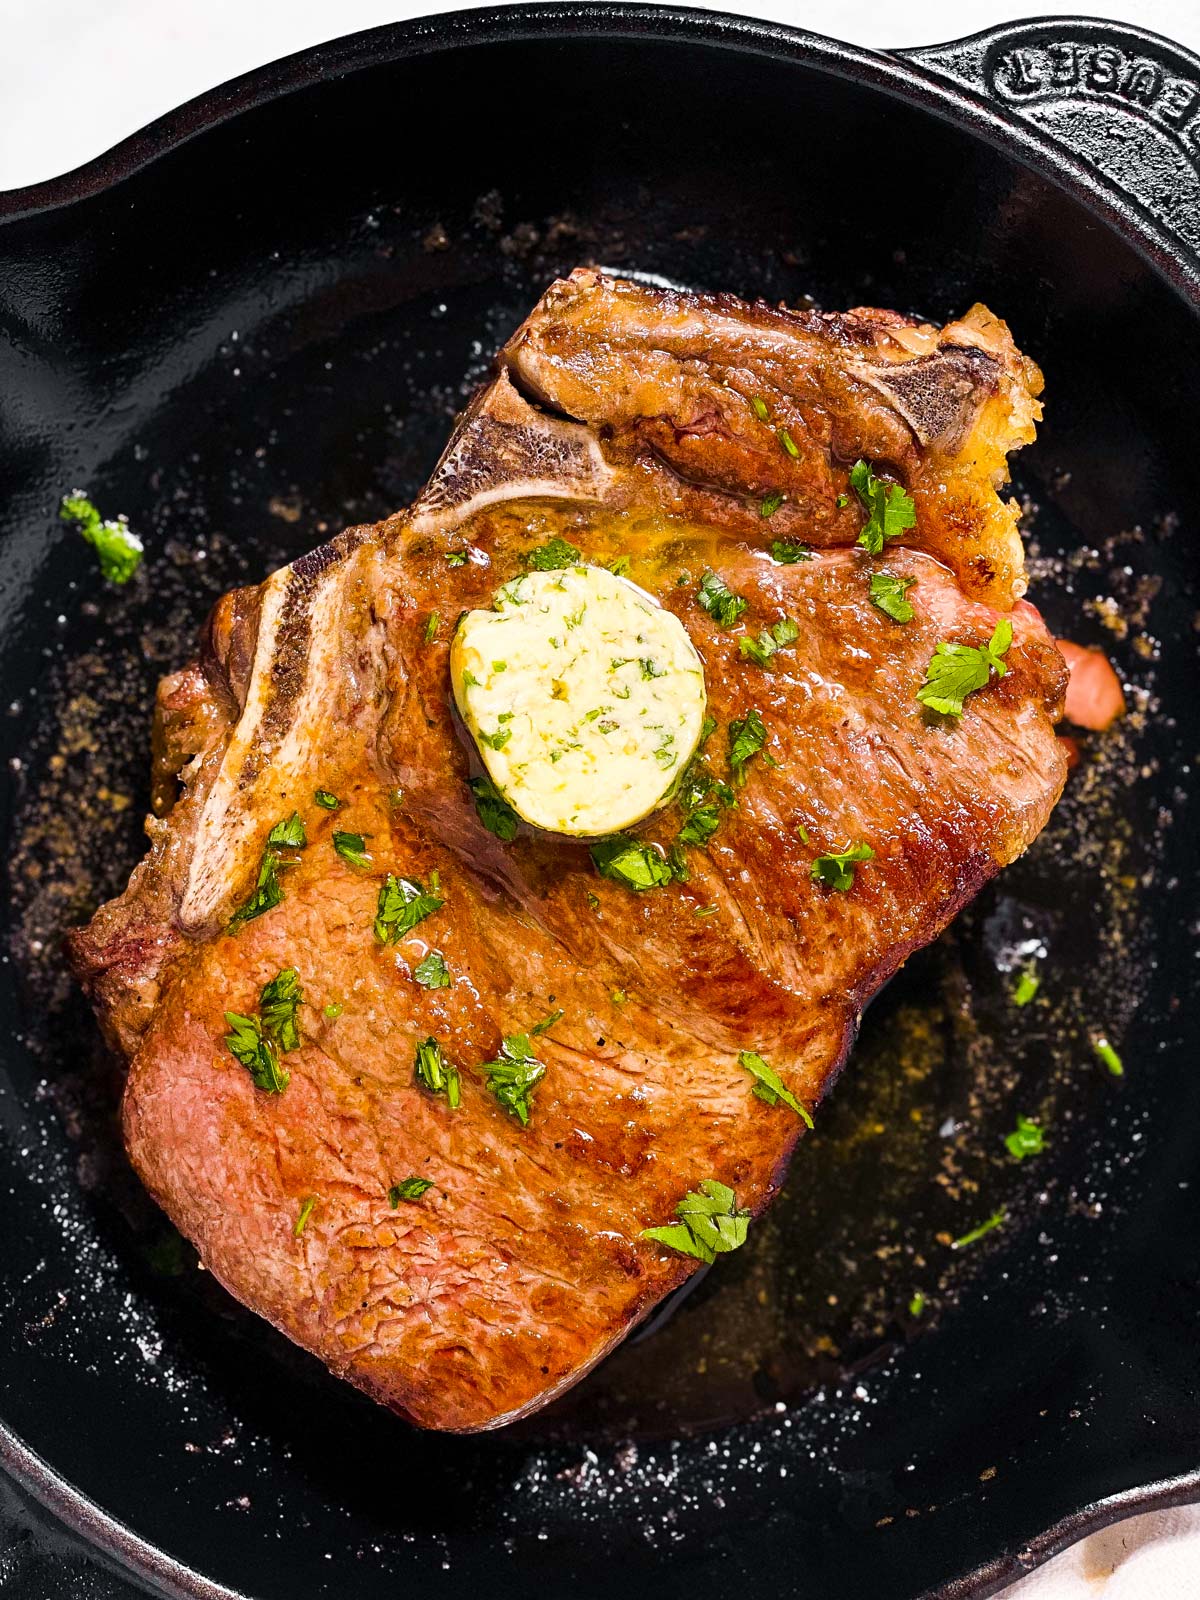 https://www.savorynothings.com/wp-content/uploads/2022/01/oven-baked-steak-recipe-image-3.jpg